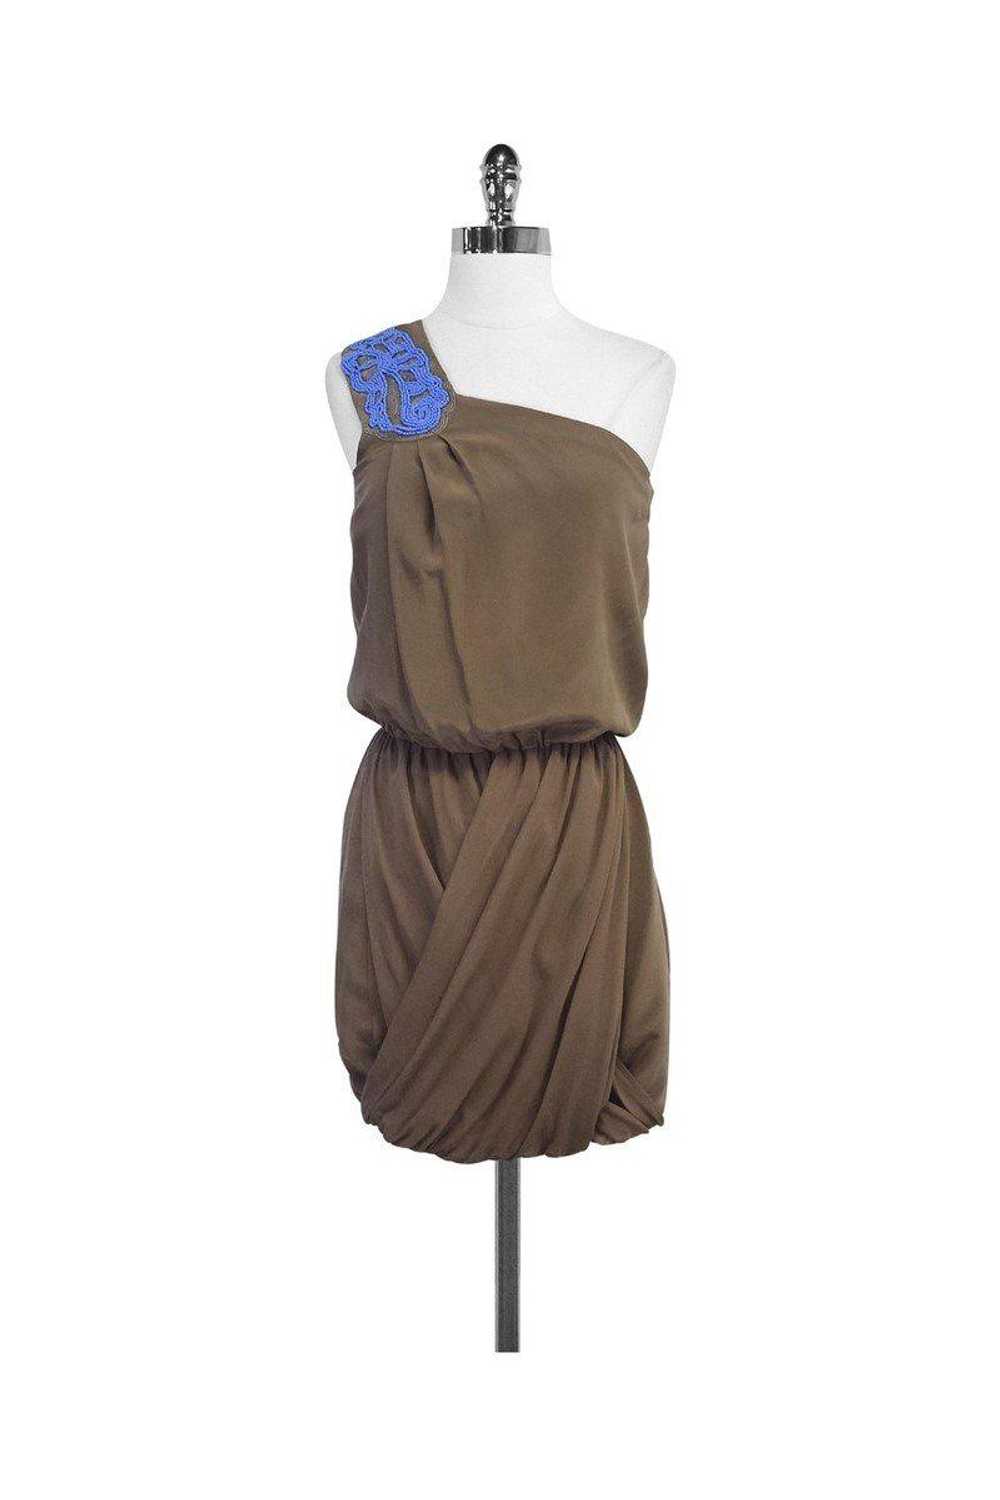 Tibi - Taupe Silk Beaded One Shoulder Dress Sz S - image 1